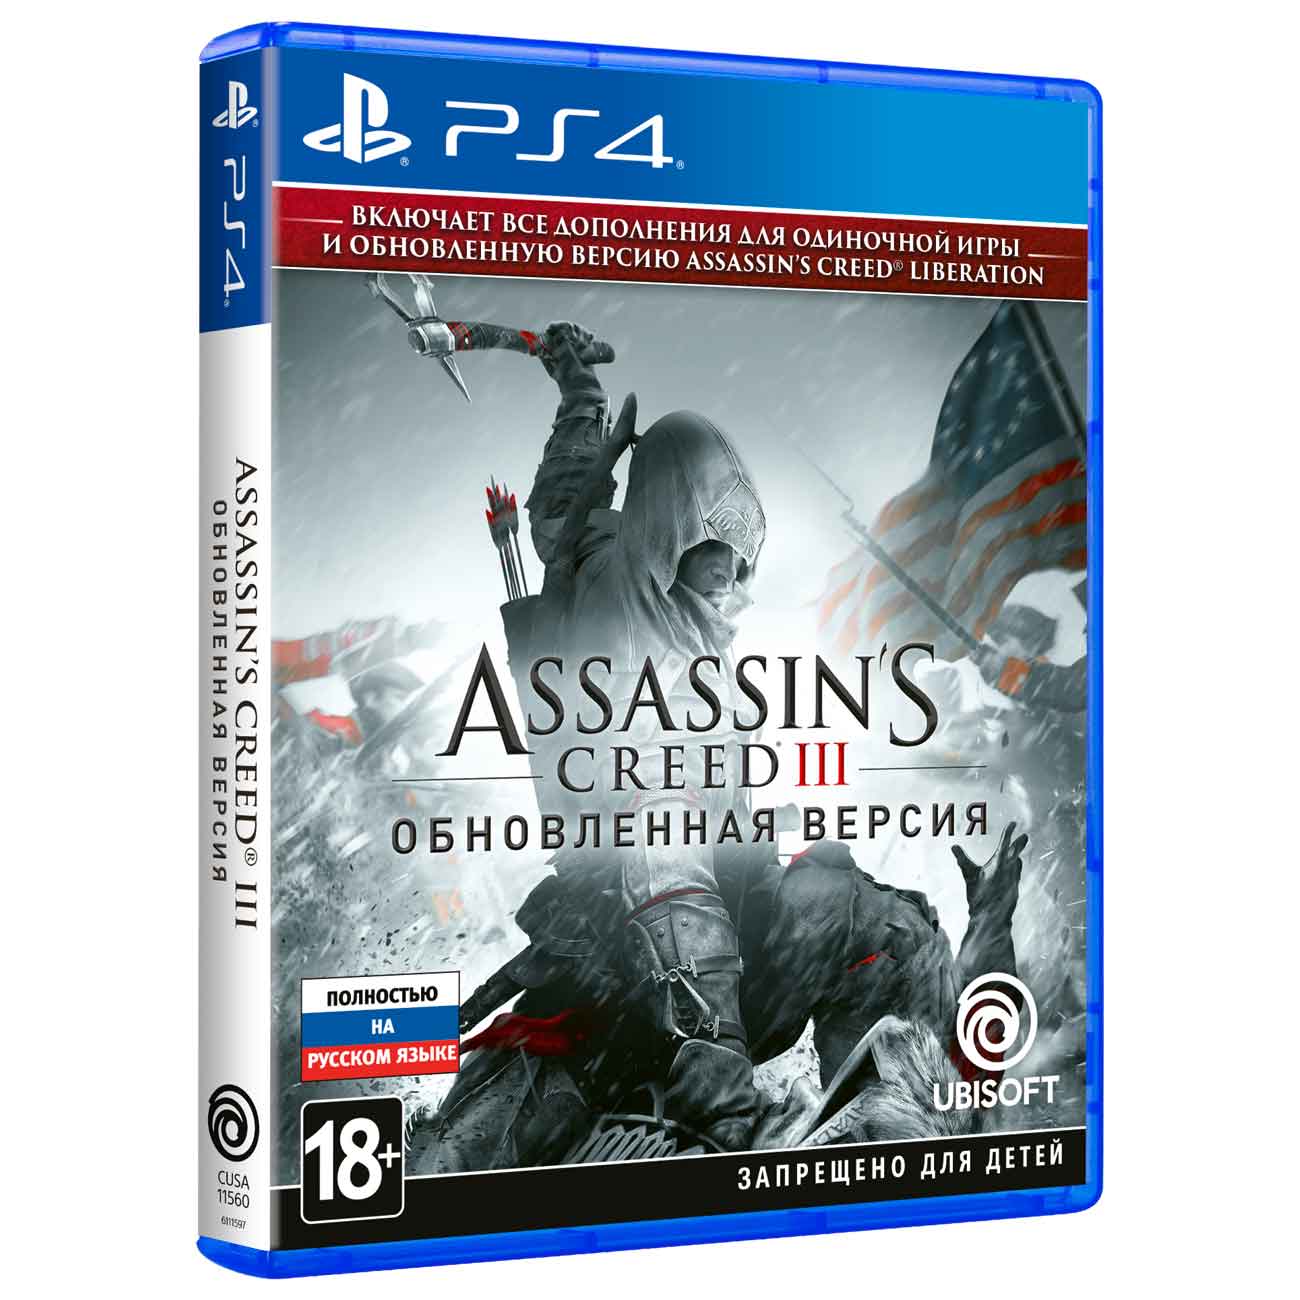 Assassin's Creed III - проблемы [Архив] - Форум Игромании